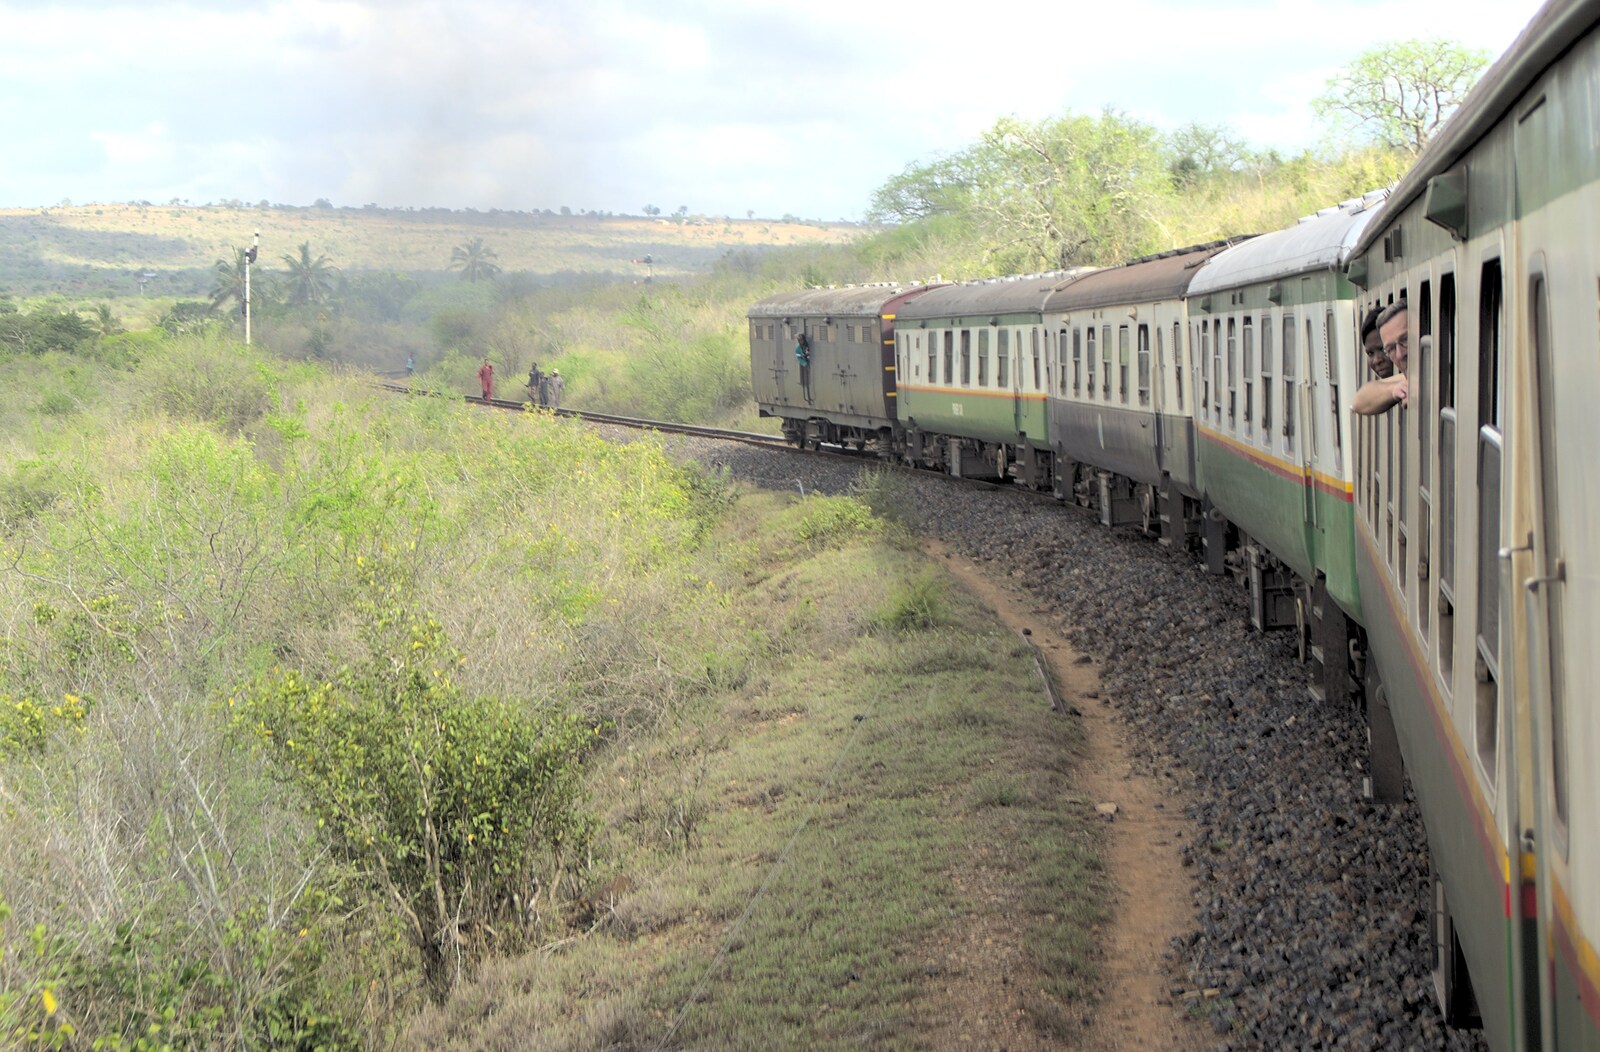 Long Train (not) Runnin': Tiwi Beach, Mombasa, Kenya - 7th November 2010: Rumbling through the Kenyan countryside